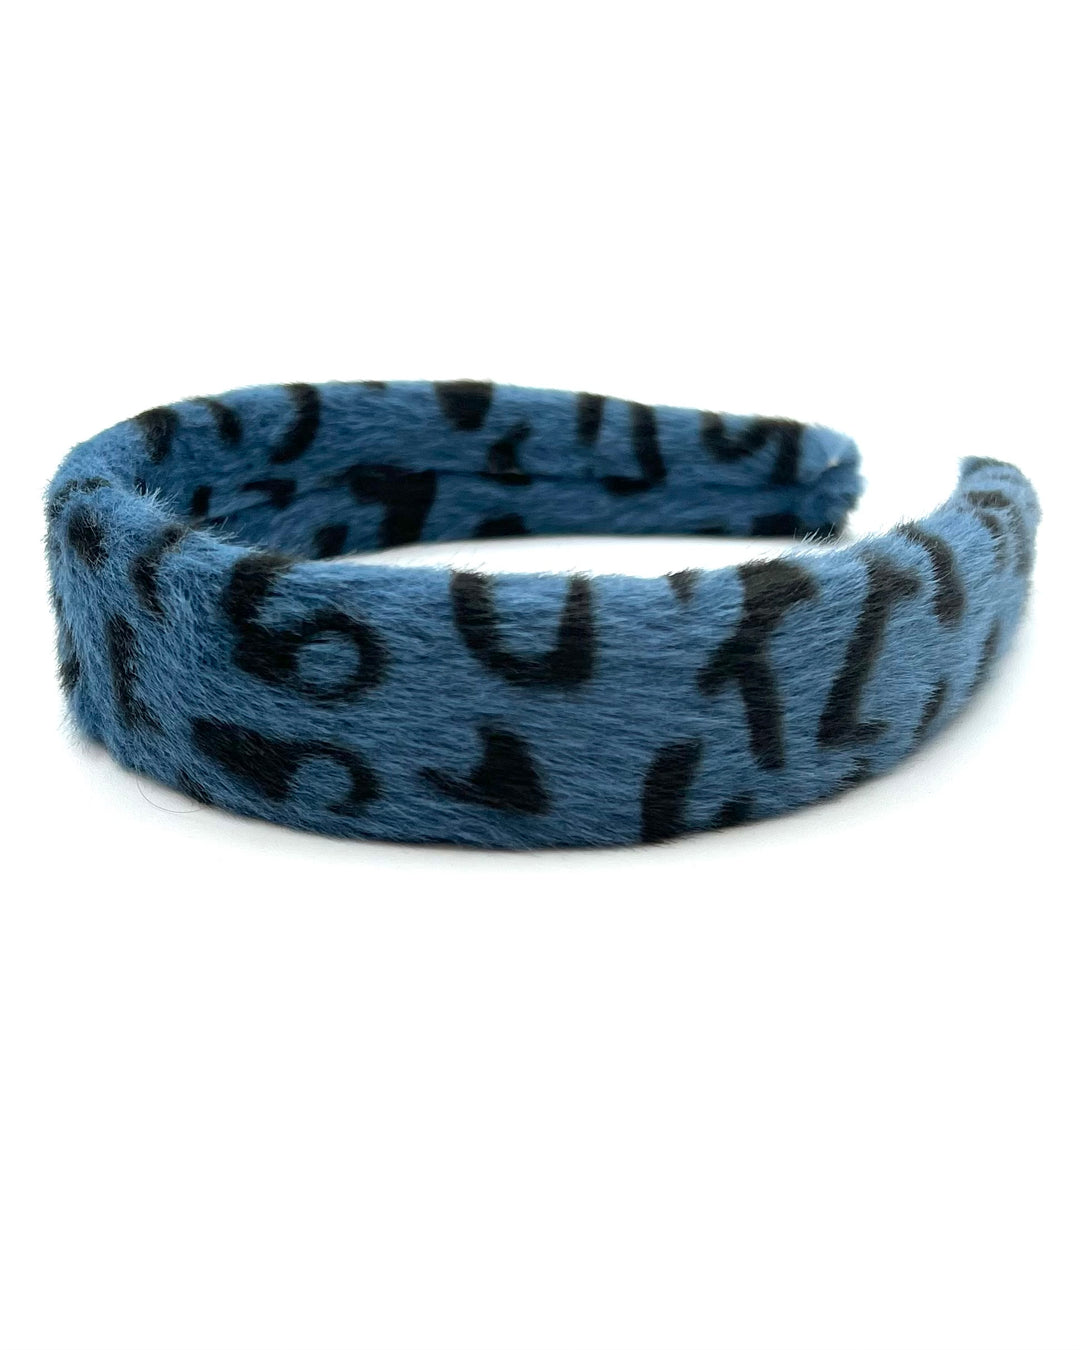 Blue Fluffy Cheetah Print Headband